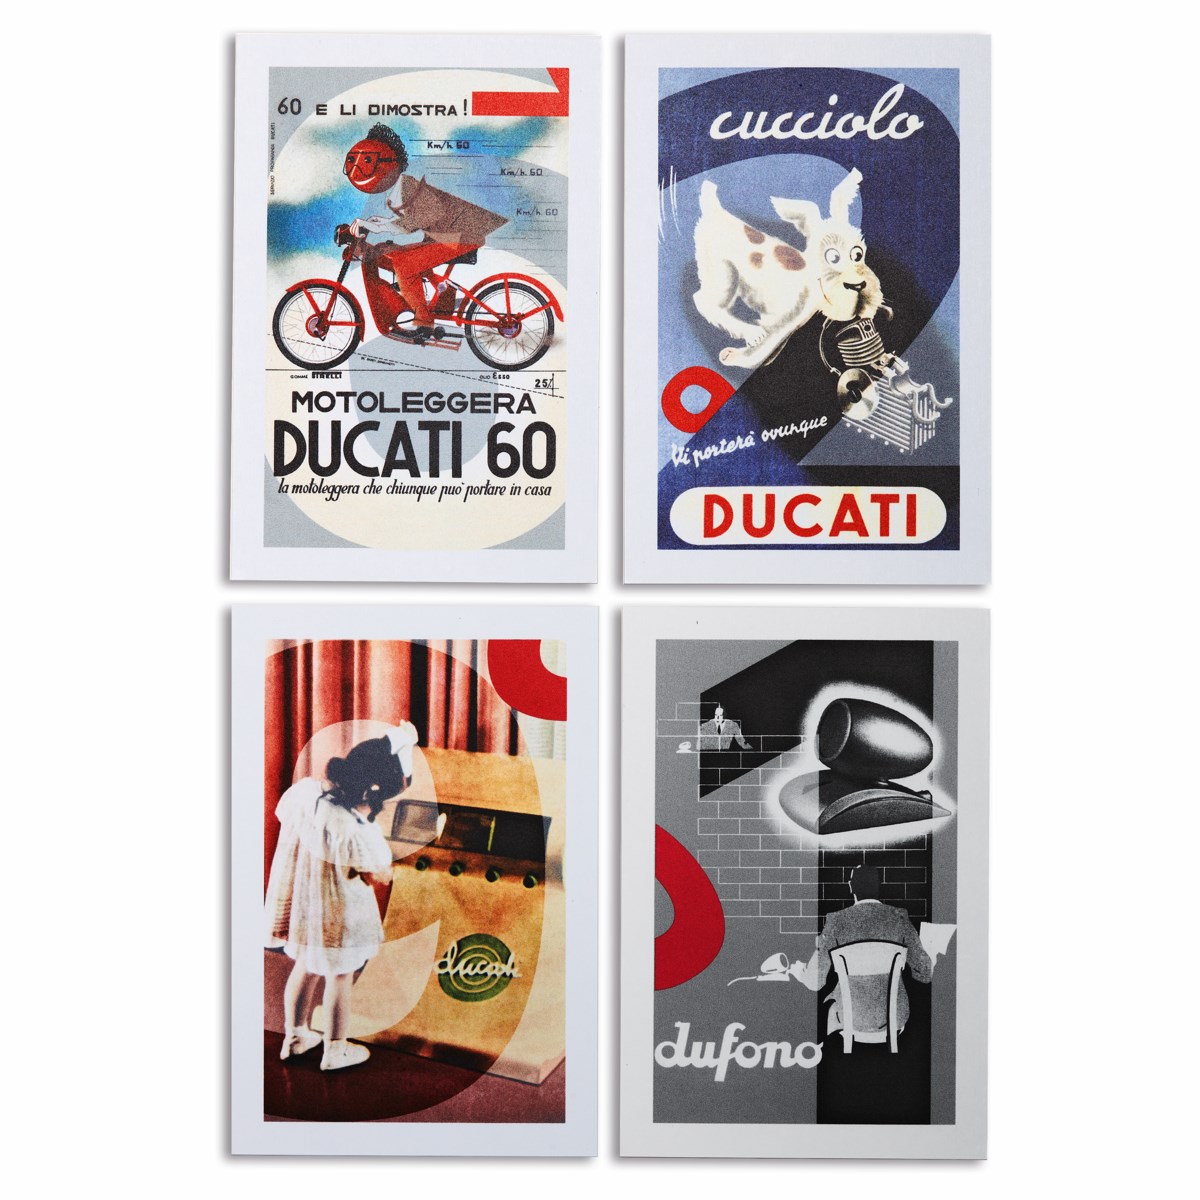 Ducati Museum postikorttisetti